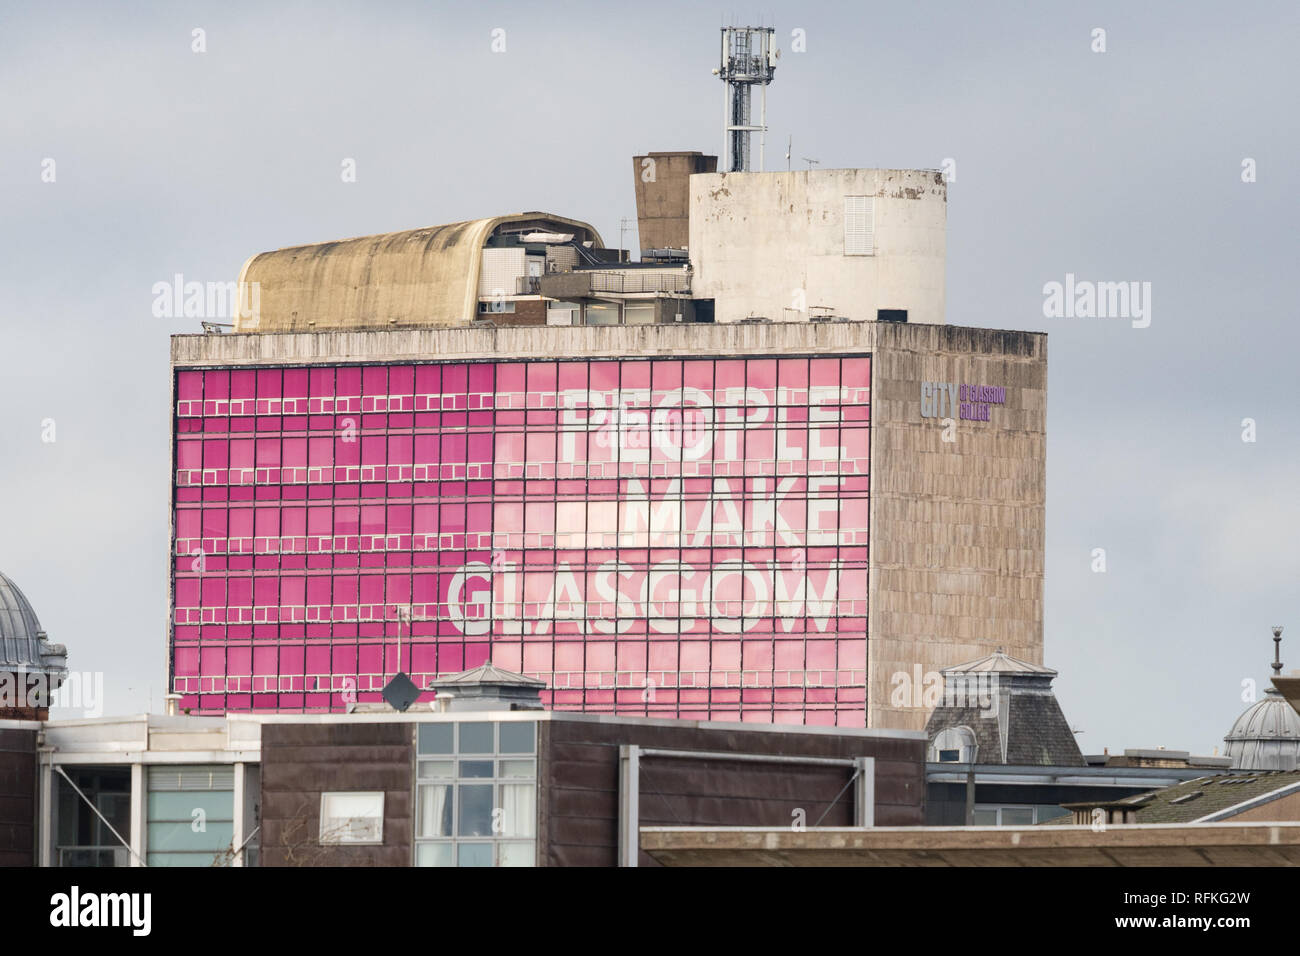 People Make Glasgow sign on former City of Glasgow College building, Glasgow, Scotland, UK Stock Photo